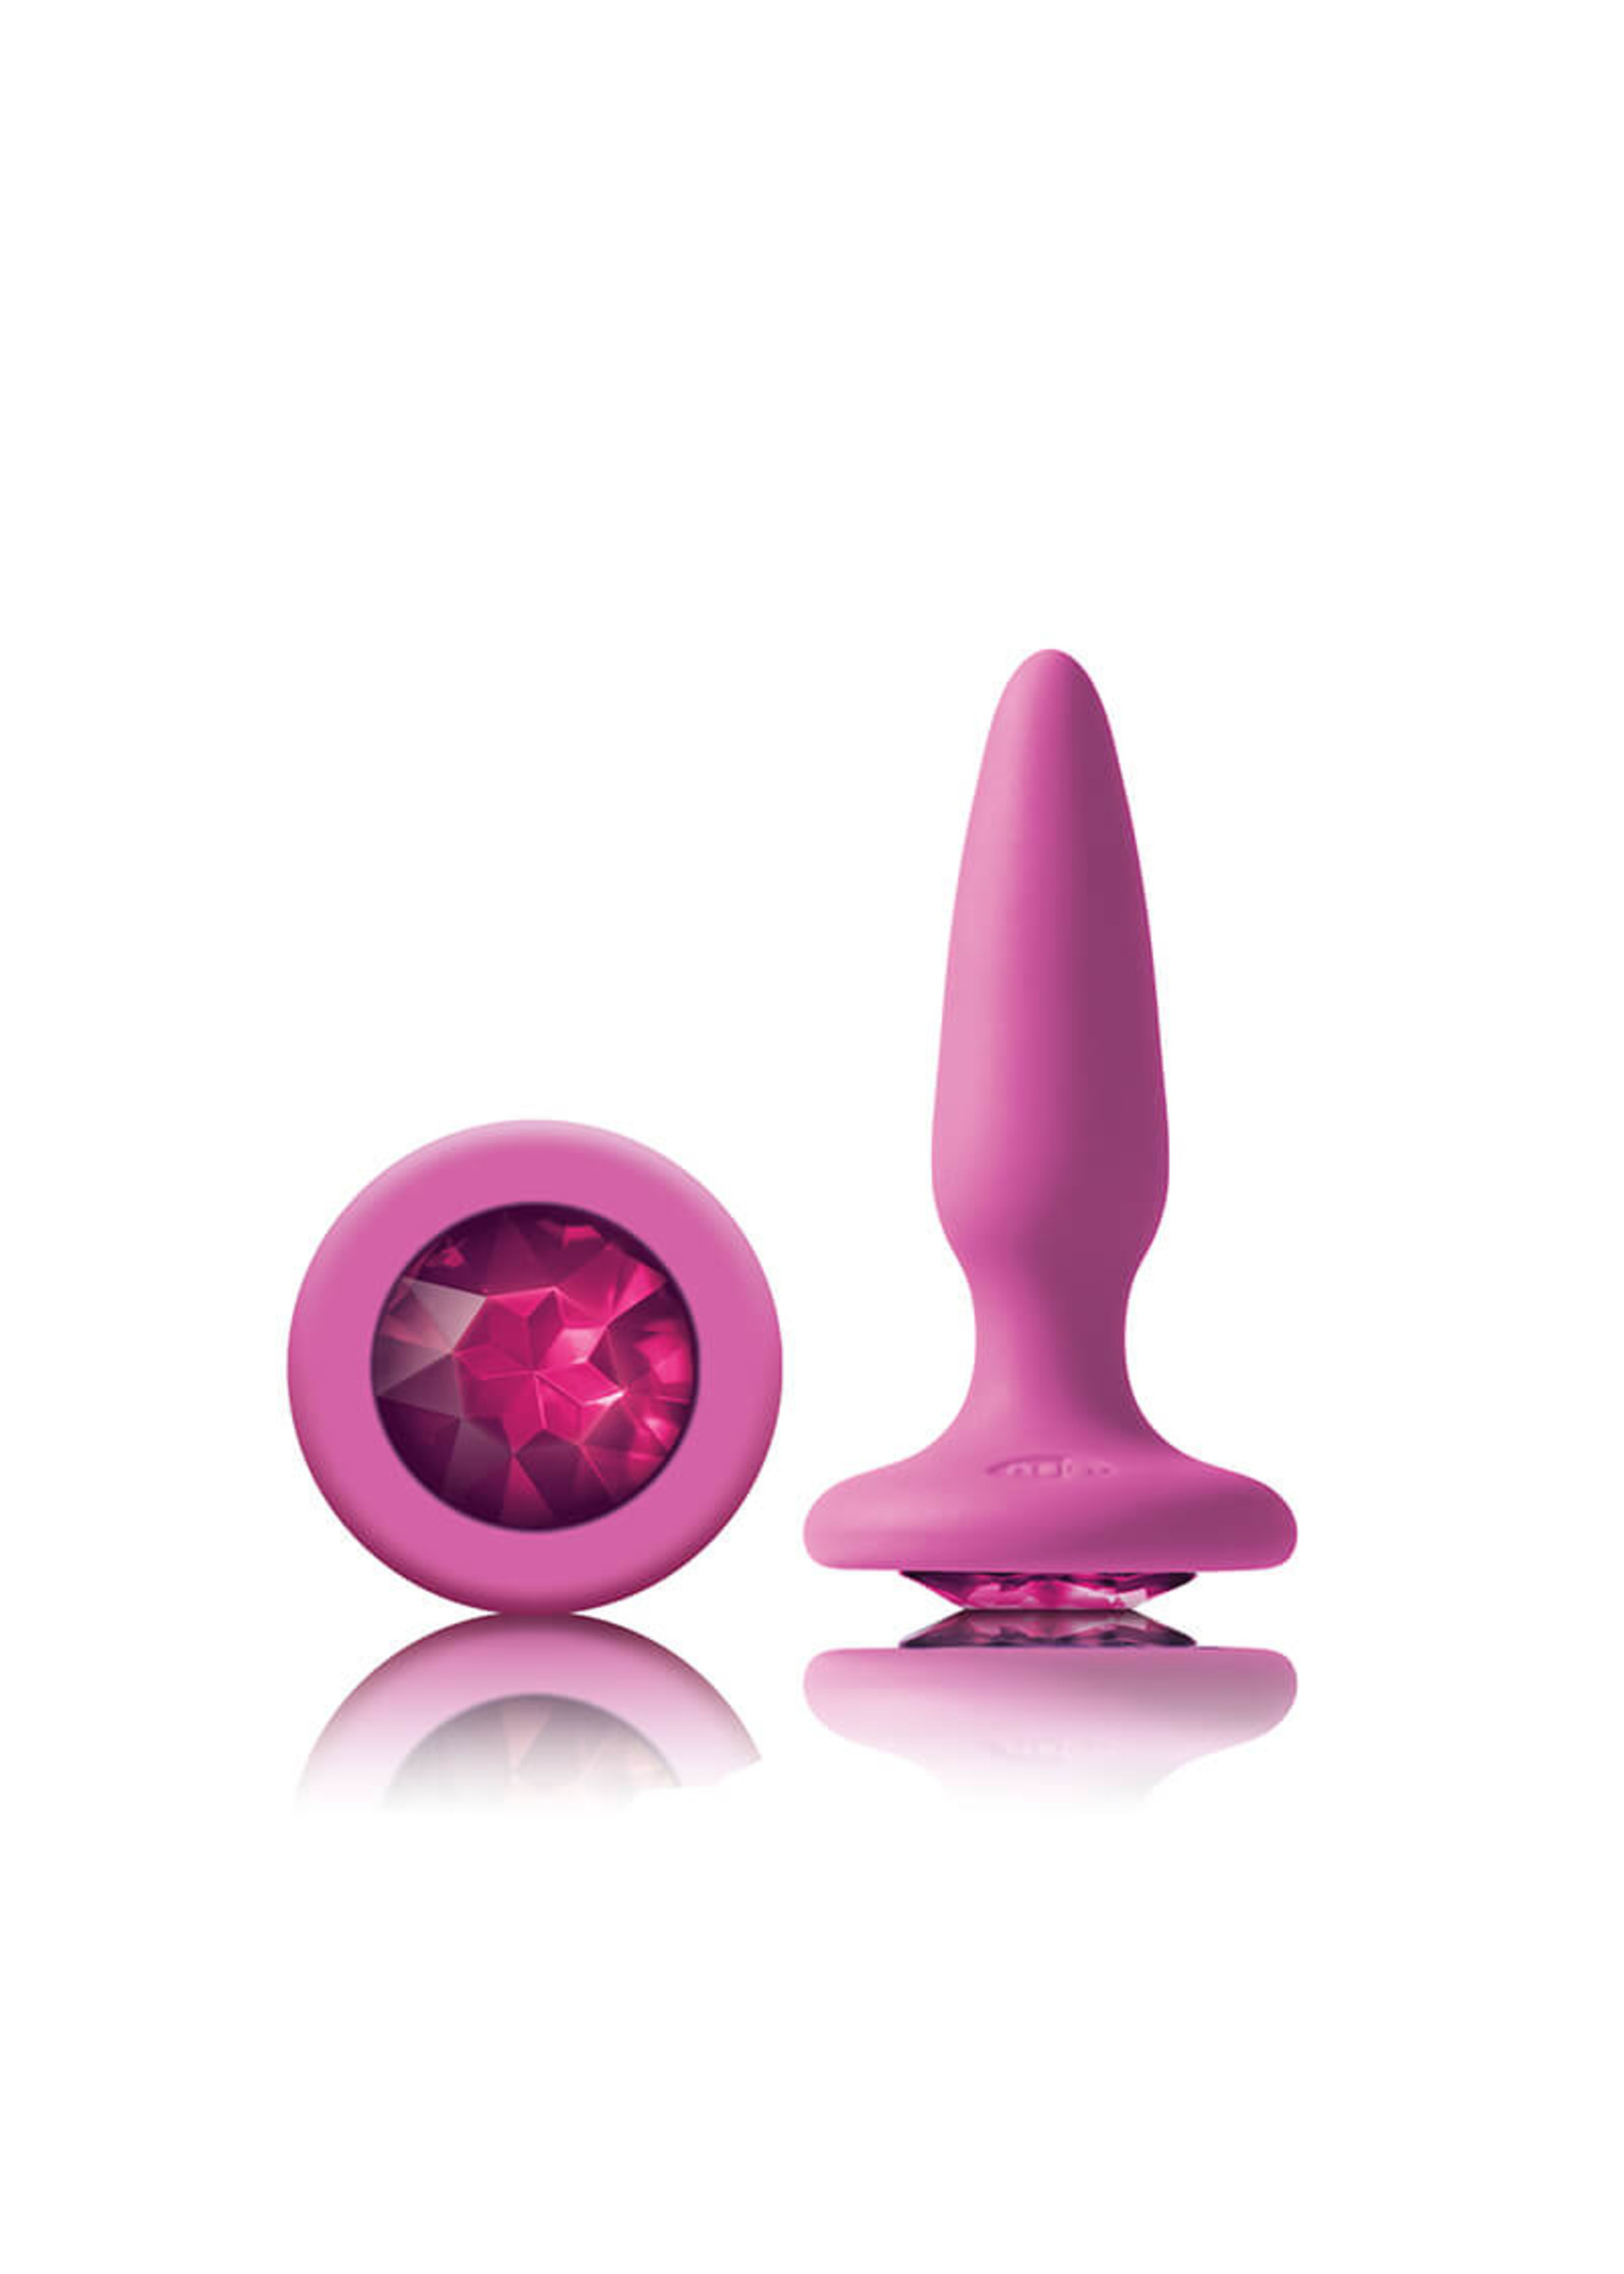 NS Novelties Glams- Mini Gem Plug- Pink